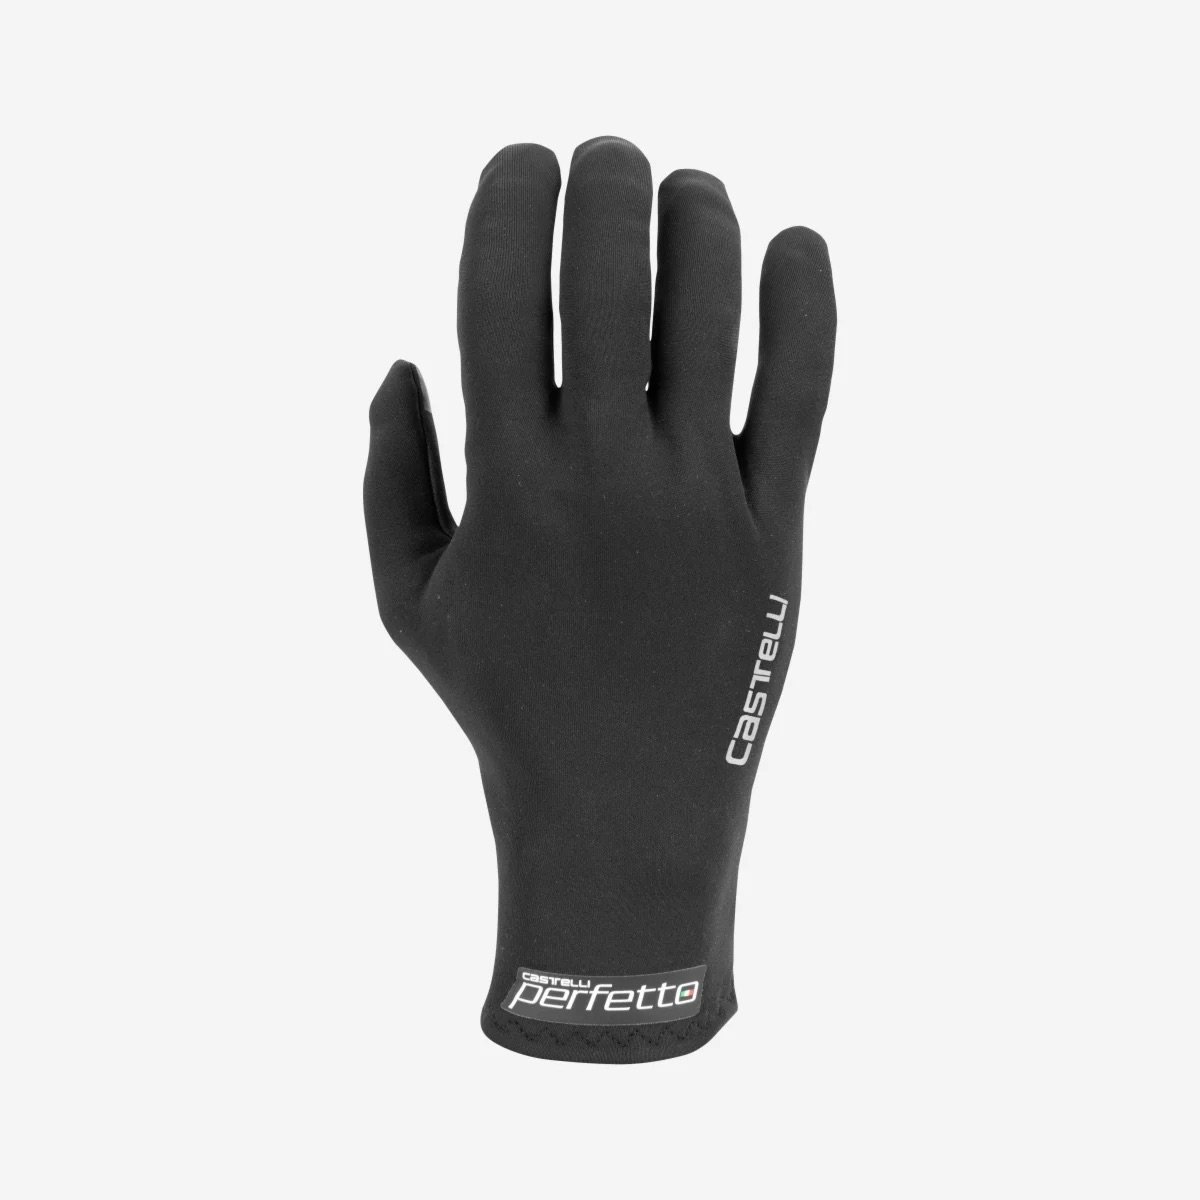 Castelli Perfetto RoS Gloves ($70)